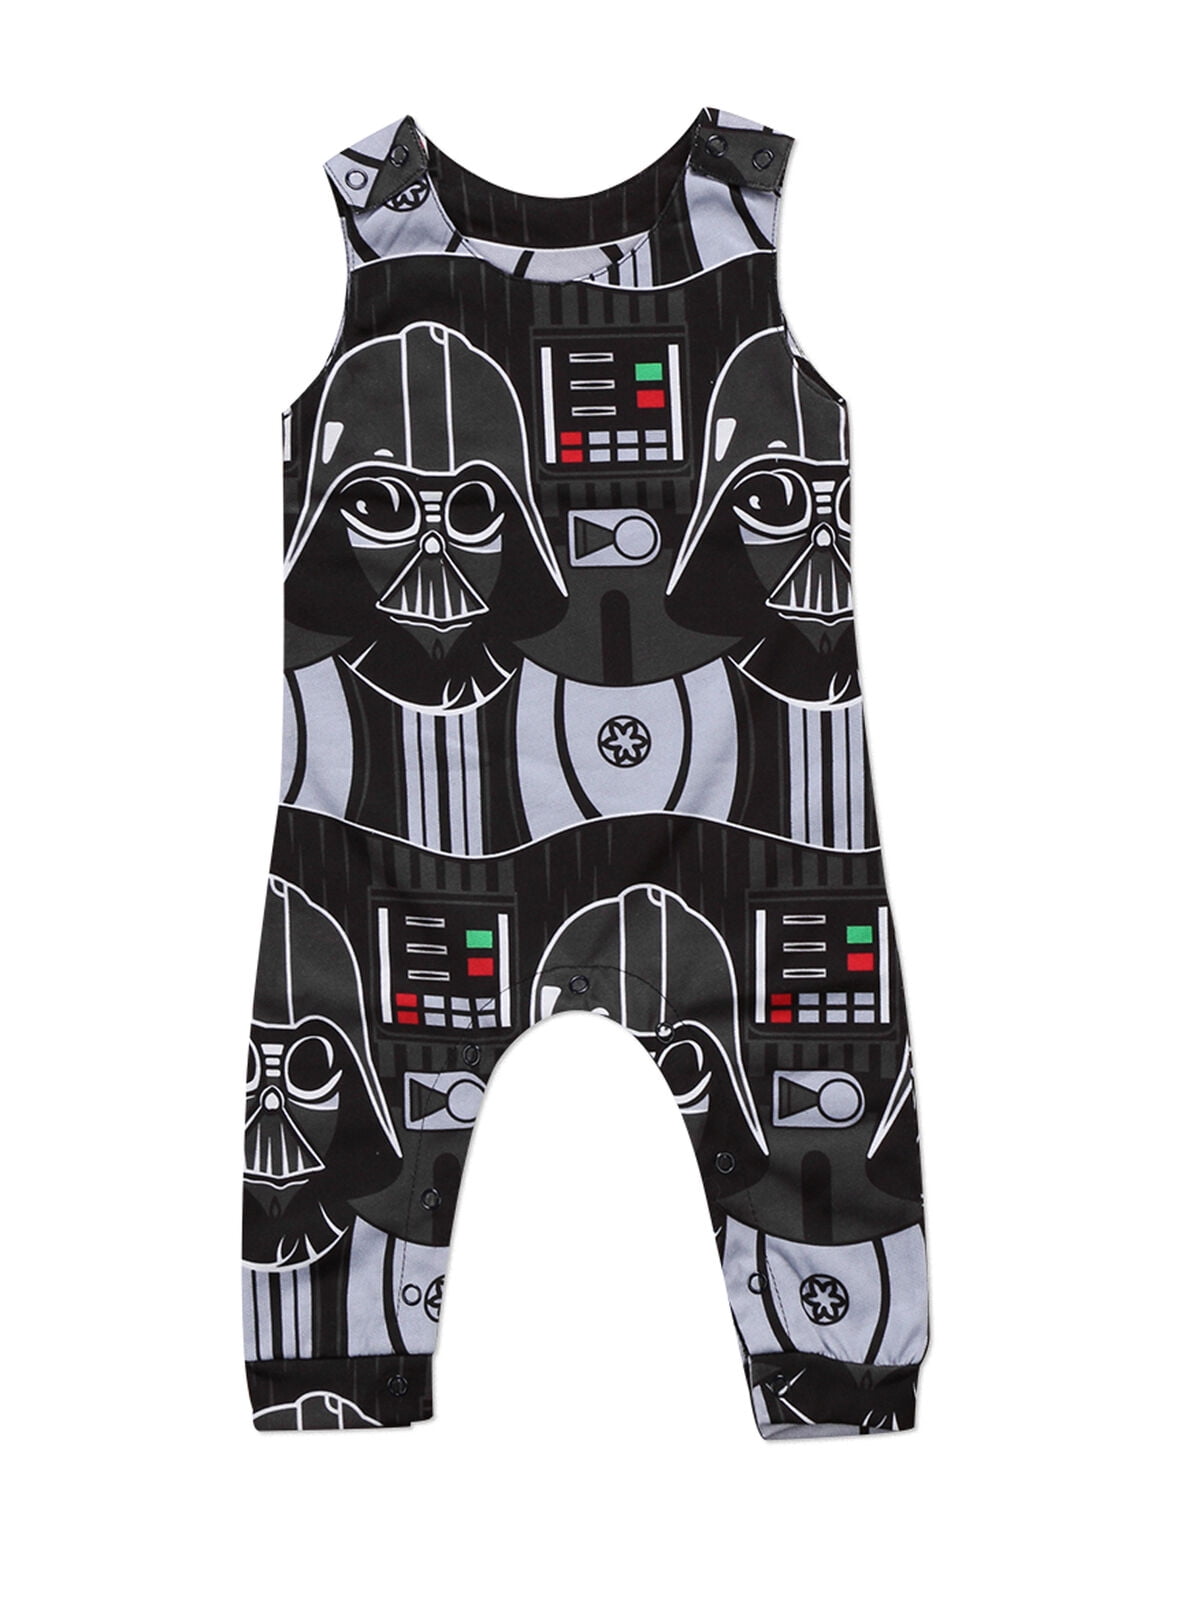 Details about   Star Wars baby girl outfit romper jumpsuit R2-D2 Stormtrooper Darth Vader blue 